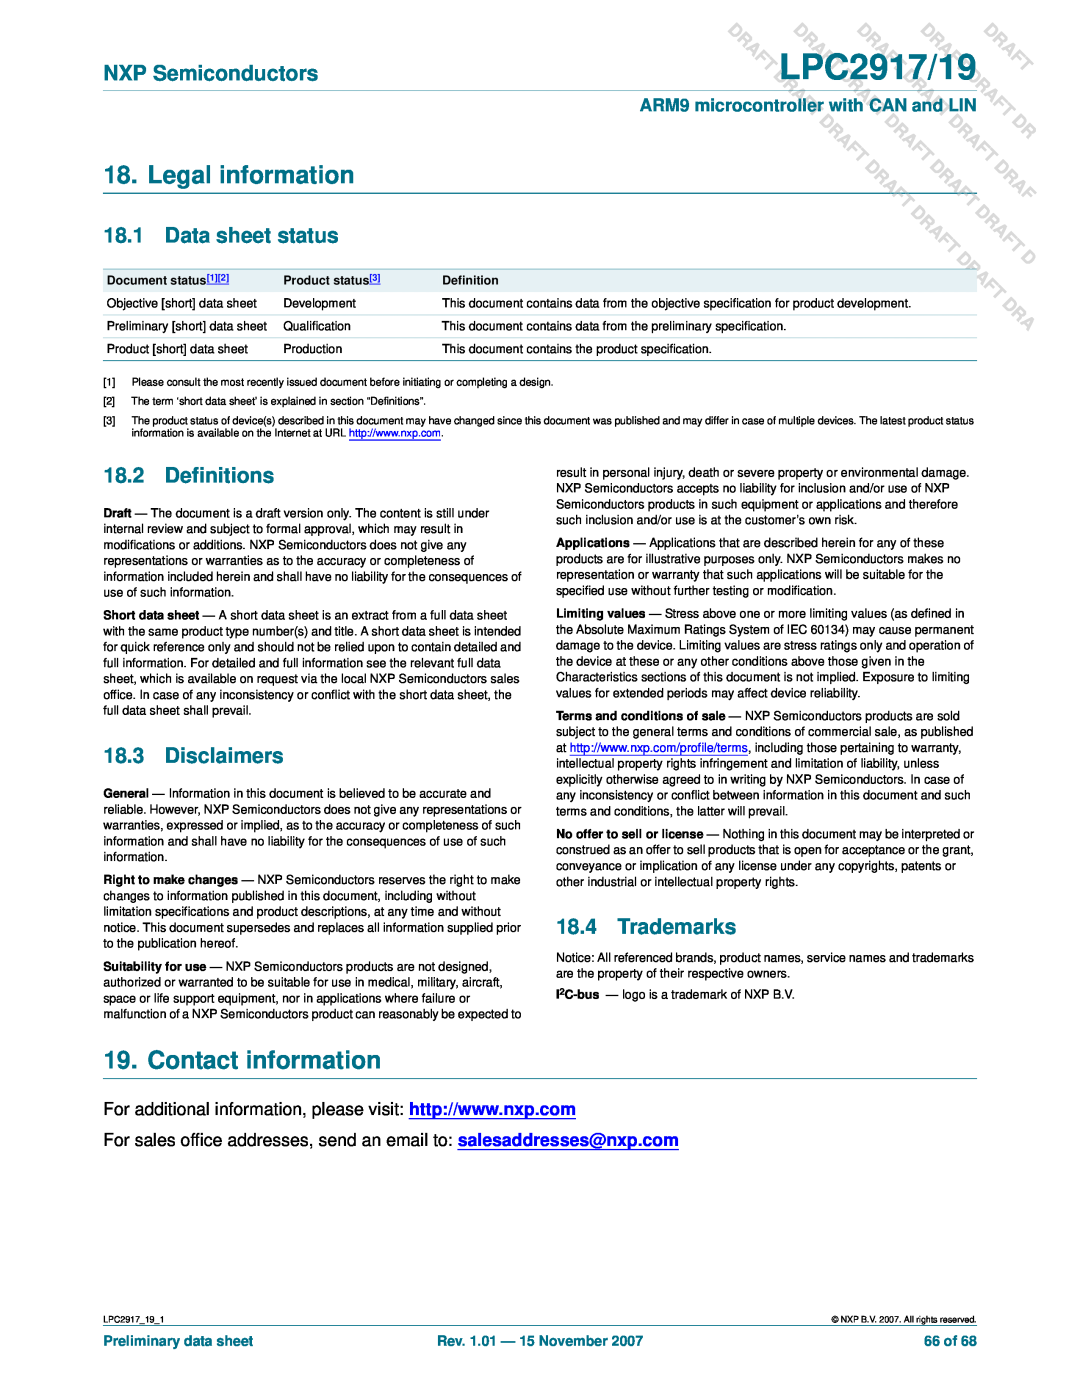 NXP Semiconductors LPC2919 user manual Legal information, Contact information, DLPC2917/19 